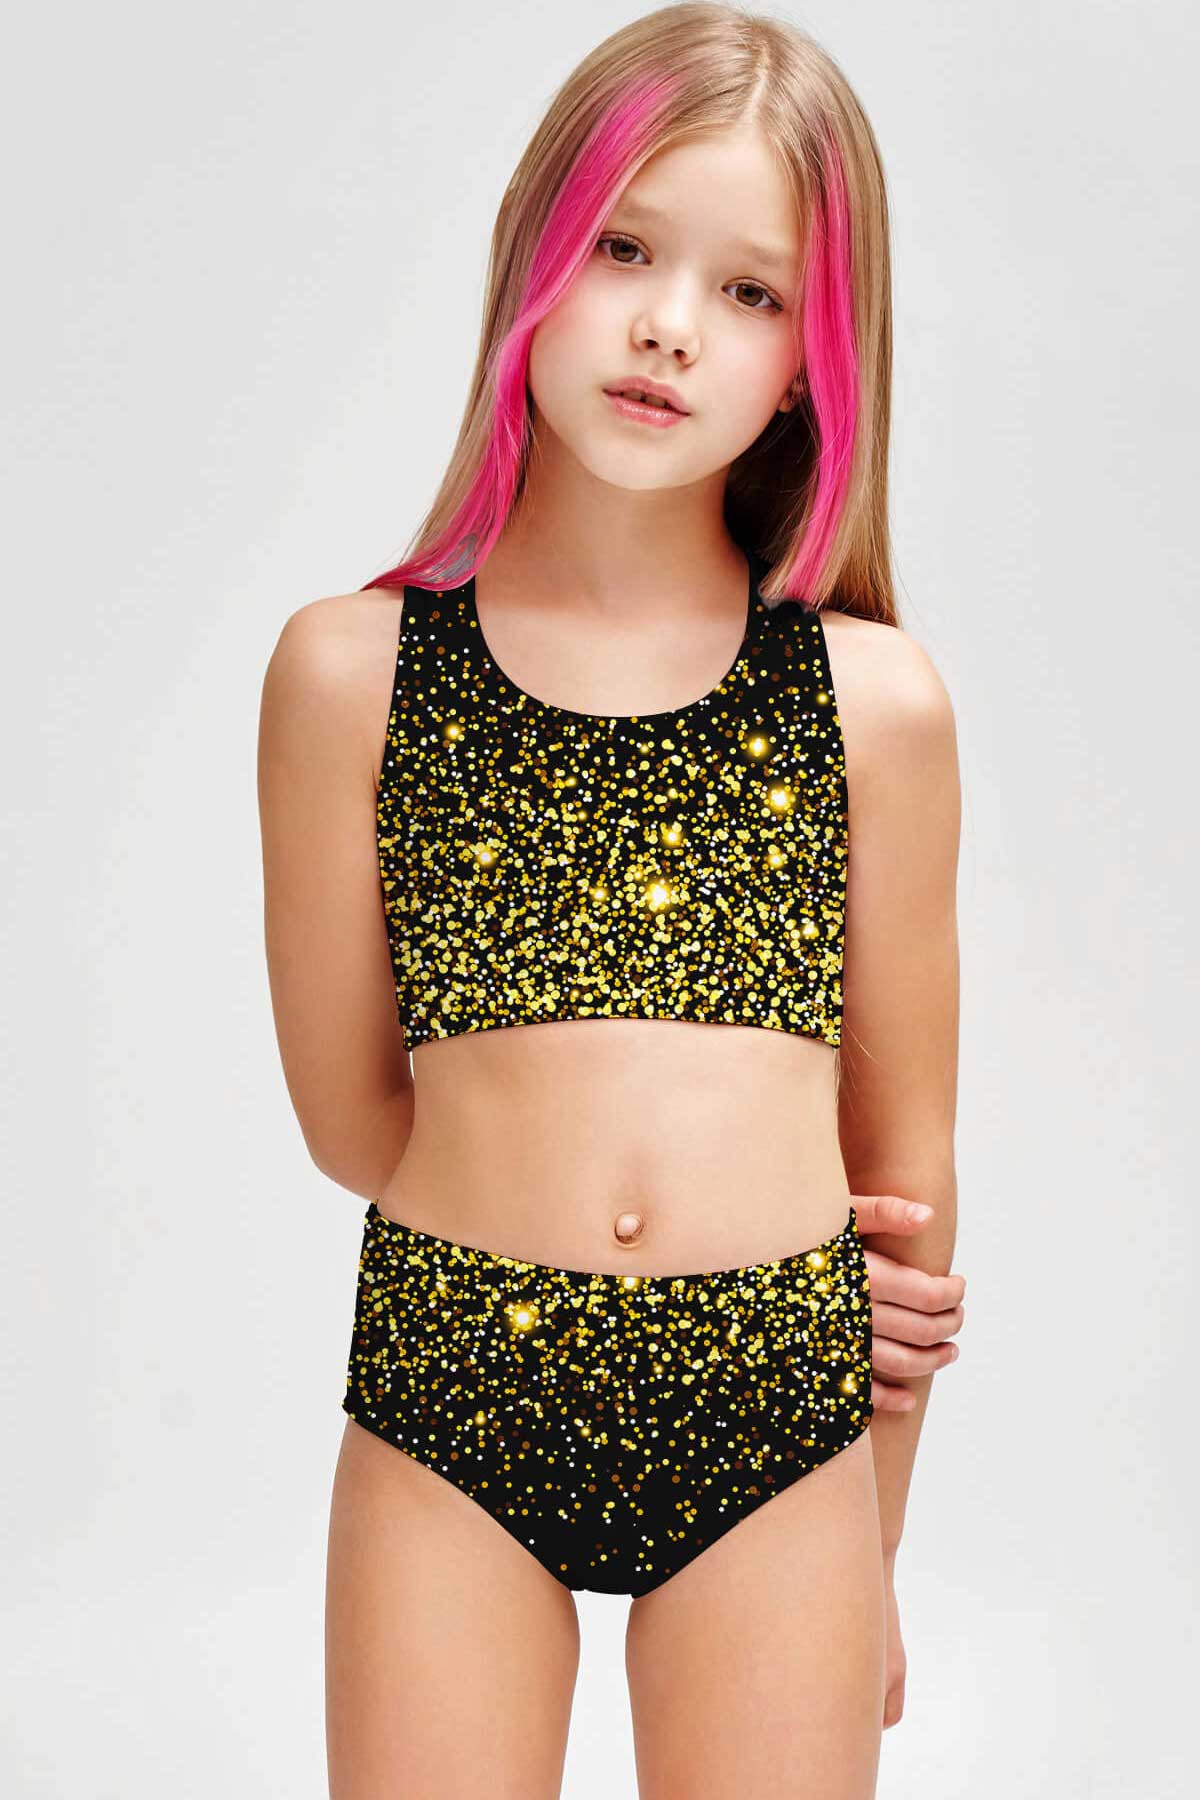 Chichi Claire Black Gold Sporty Two Piece Swim Bikini Set - Girls - Pineapple Clothing